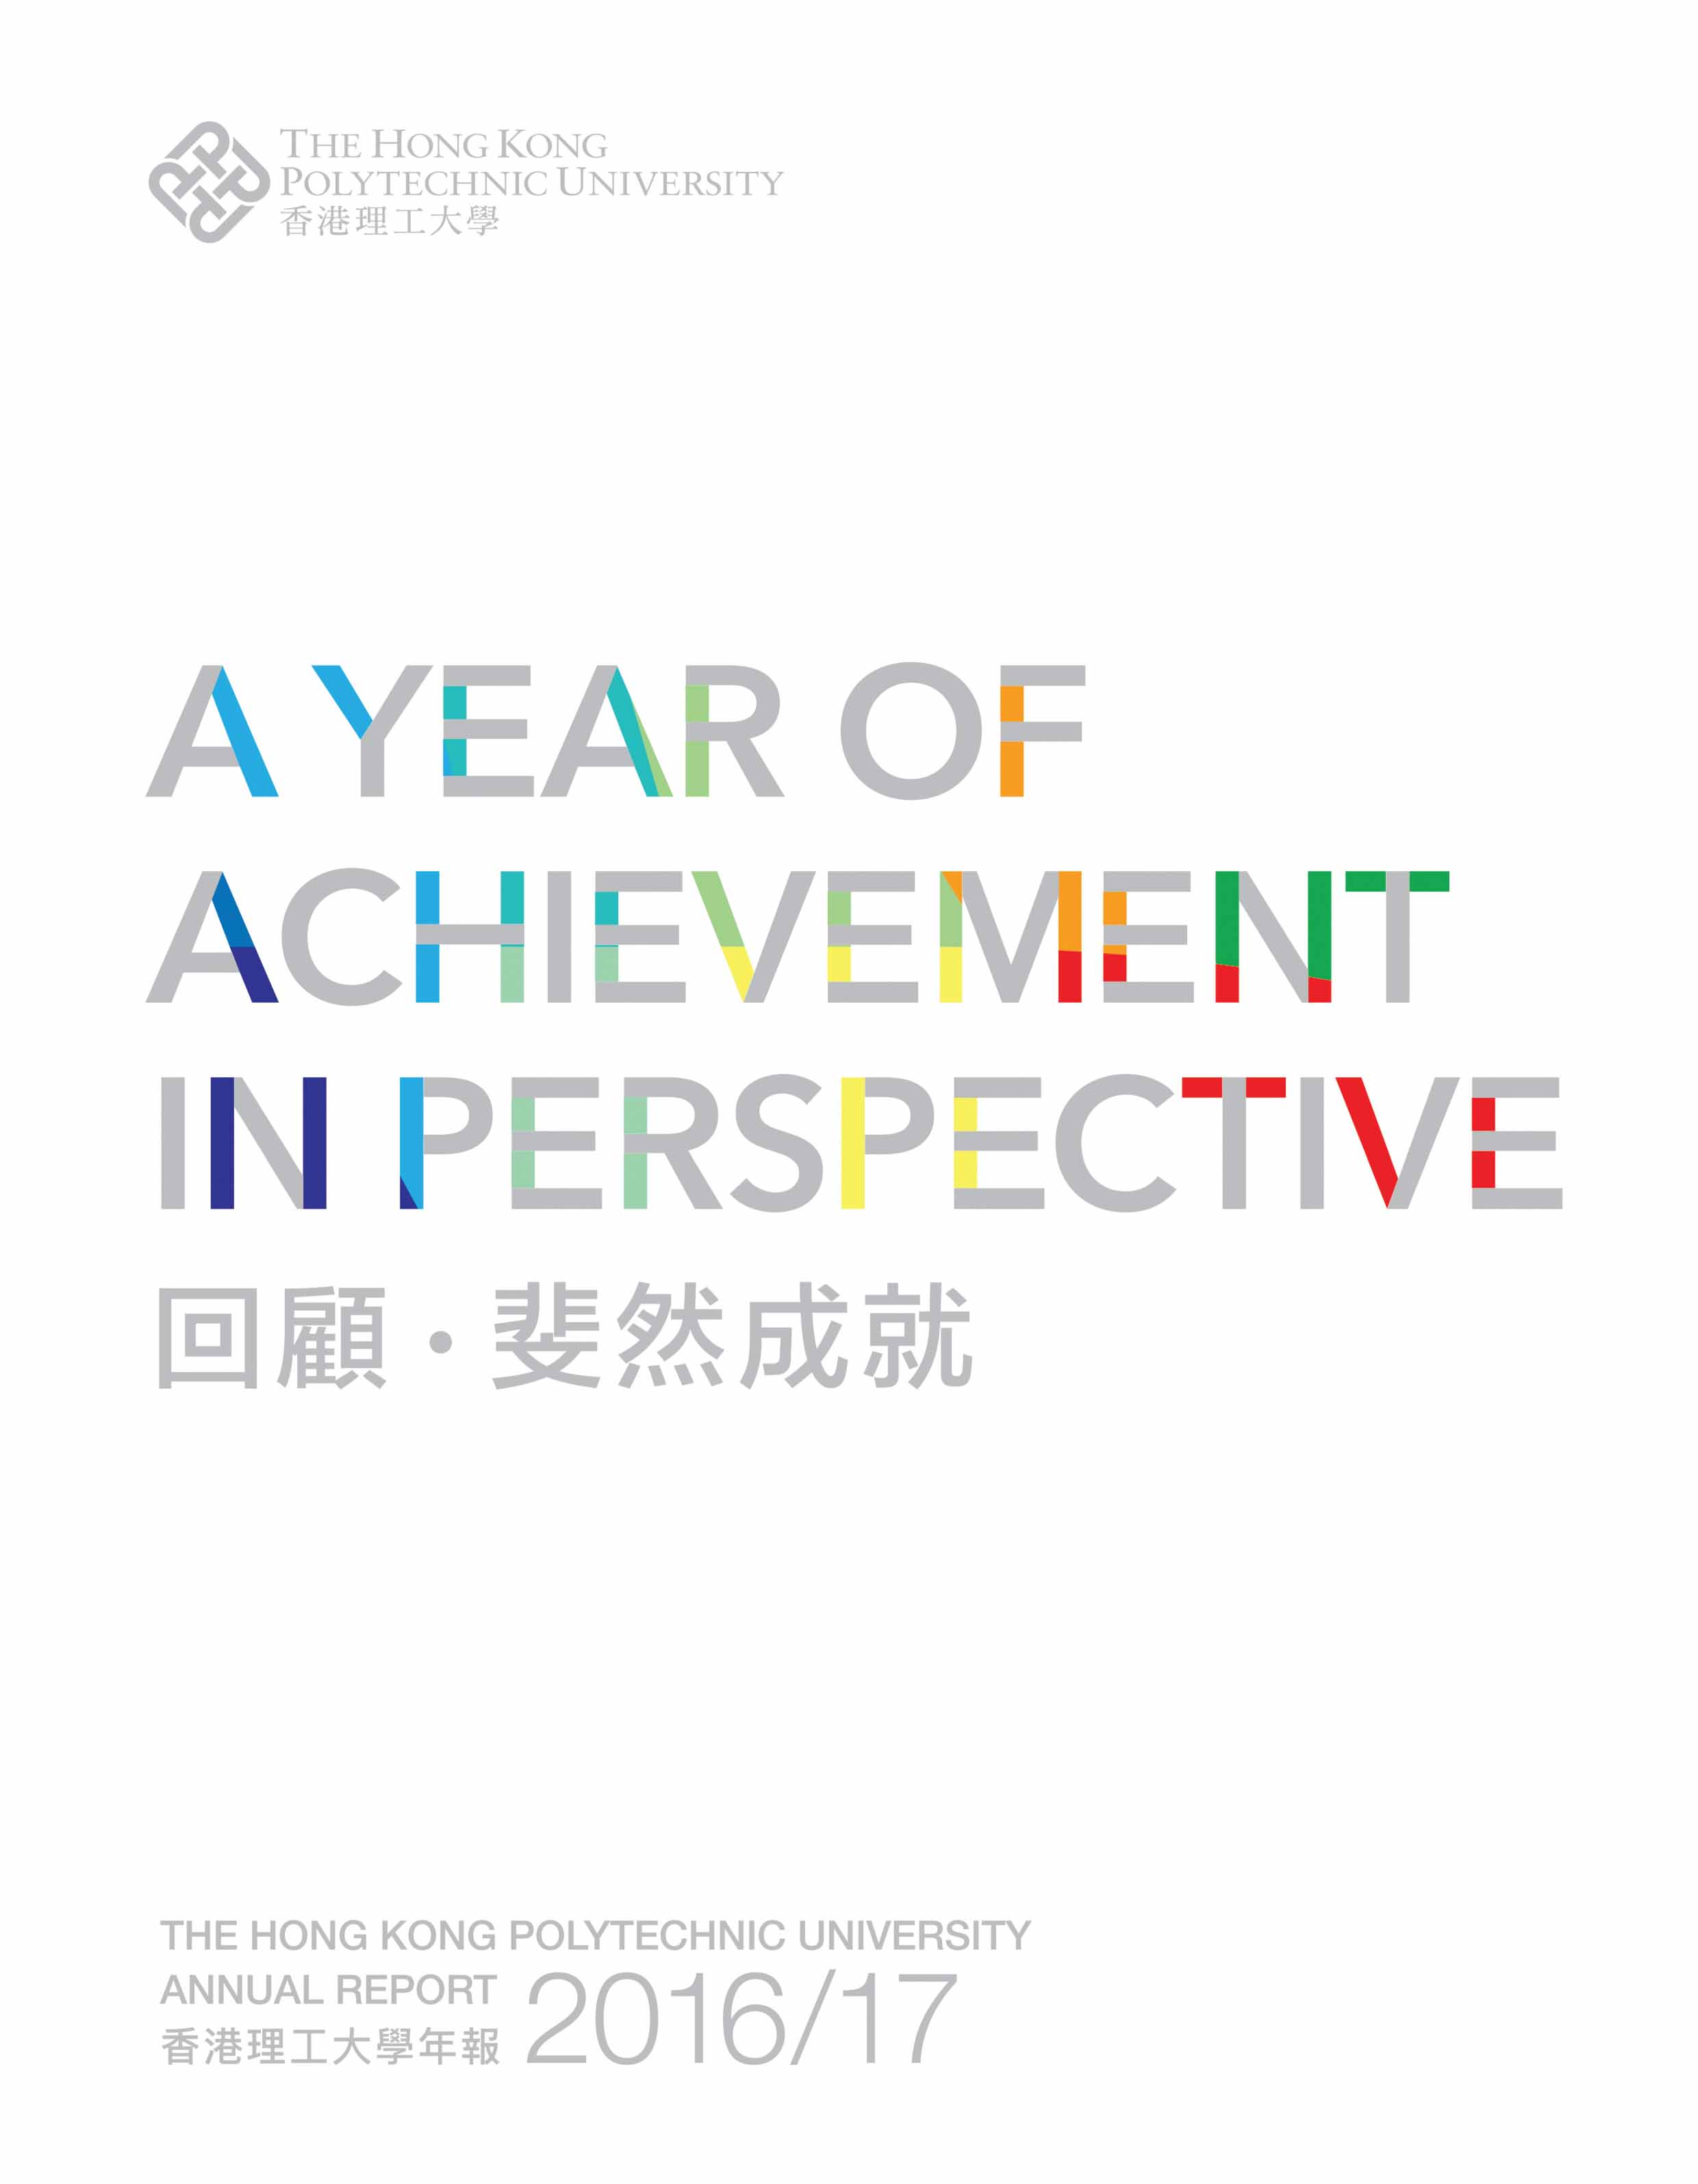 The Hong Kong Polytechnic University Annual Report 2016/17